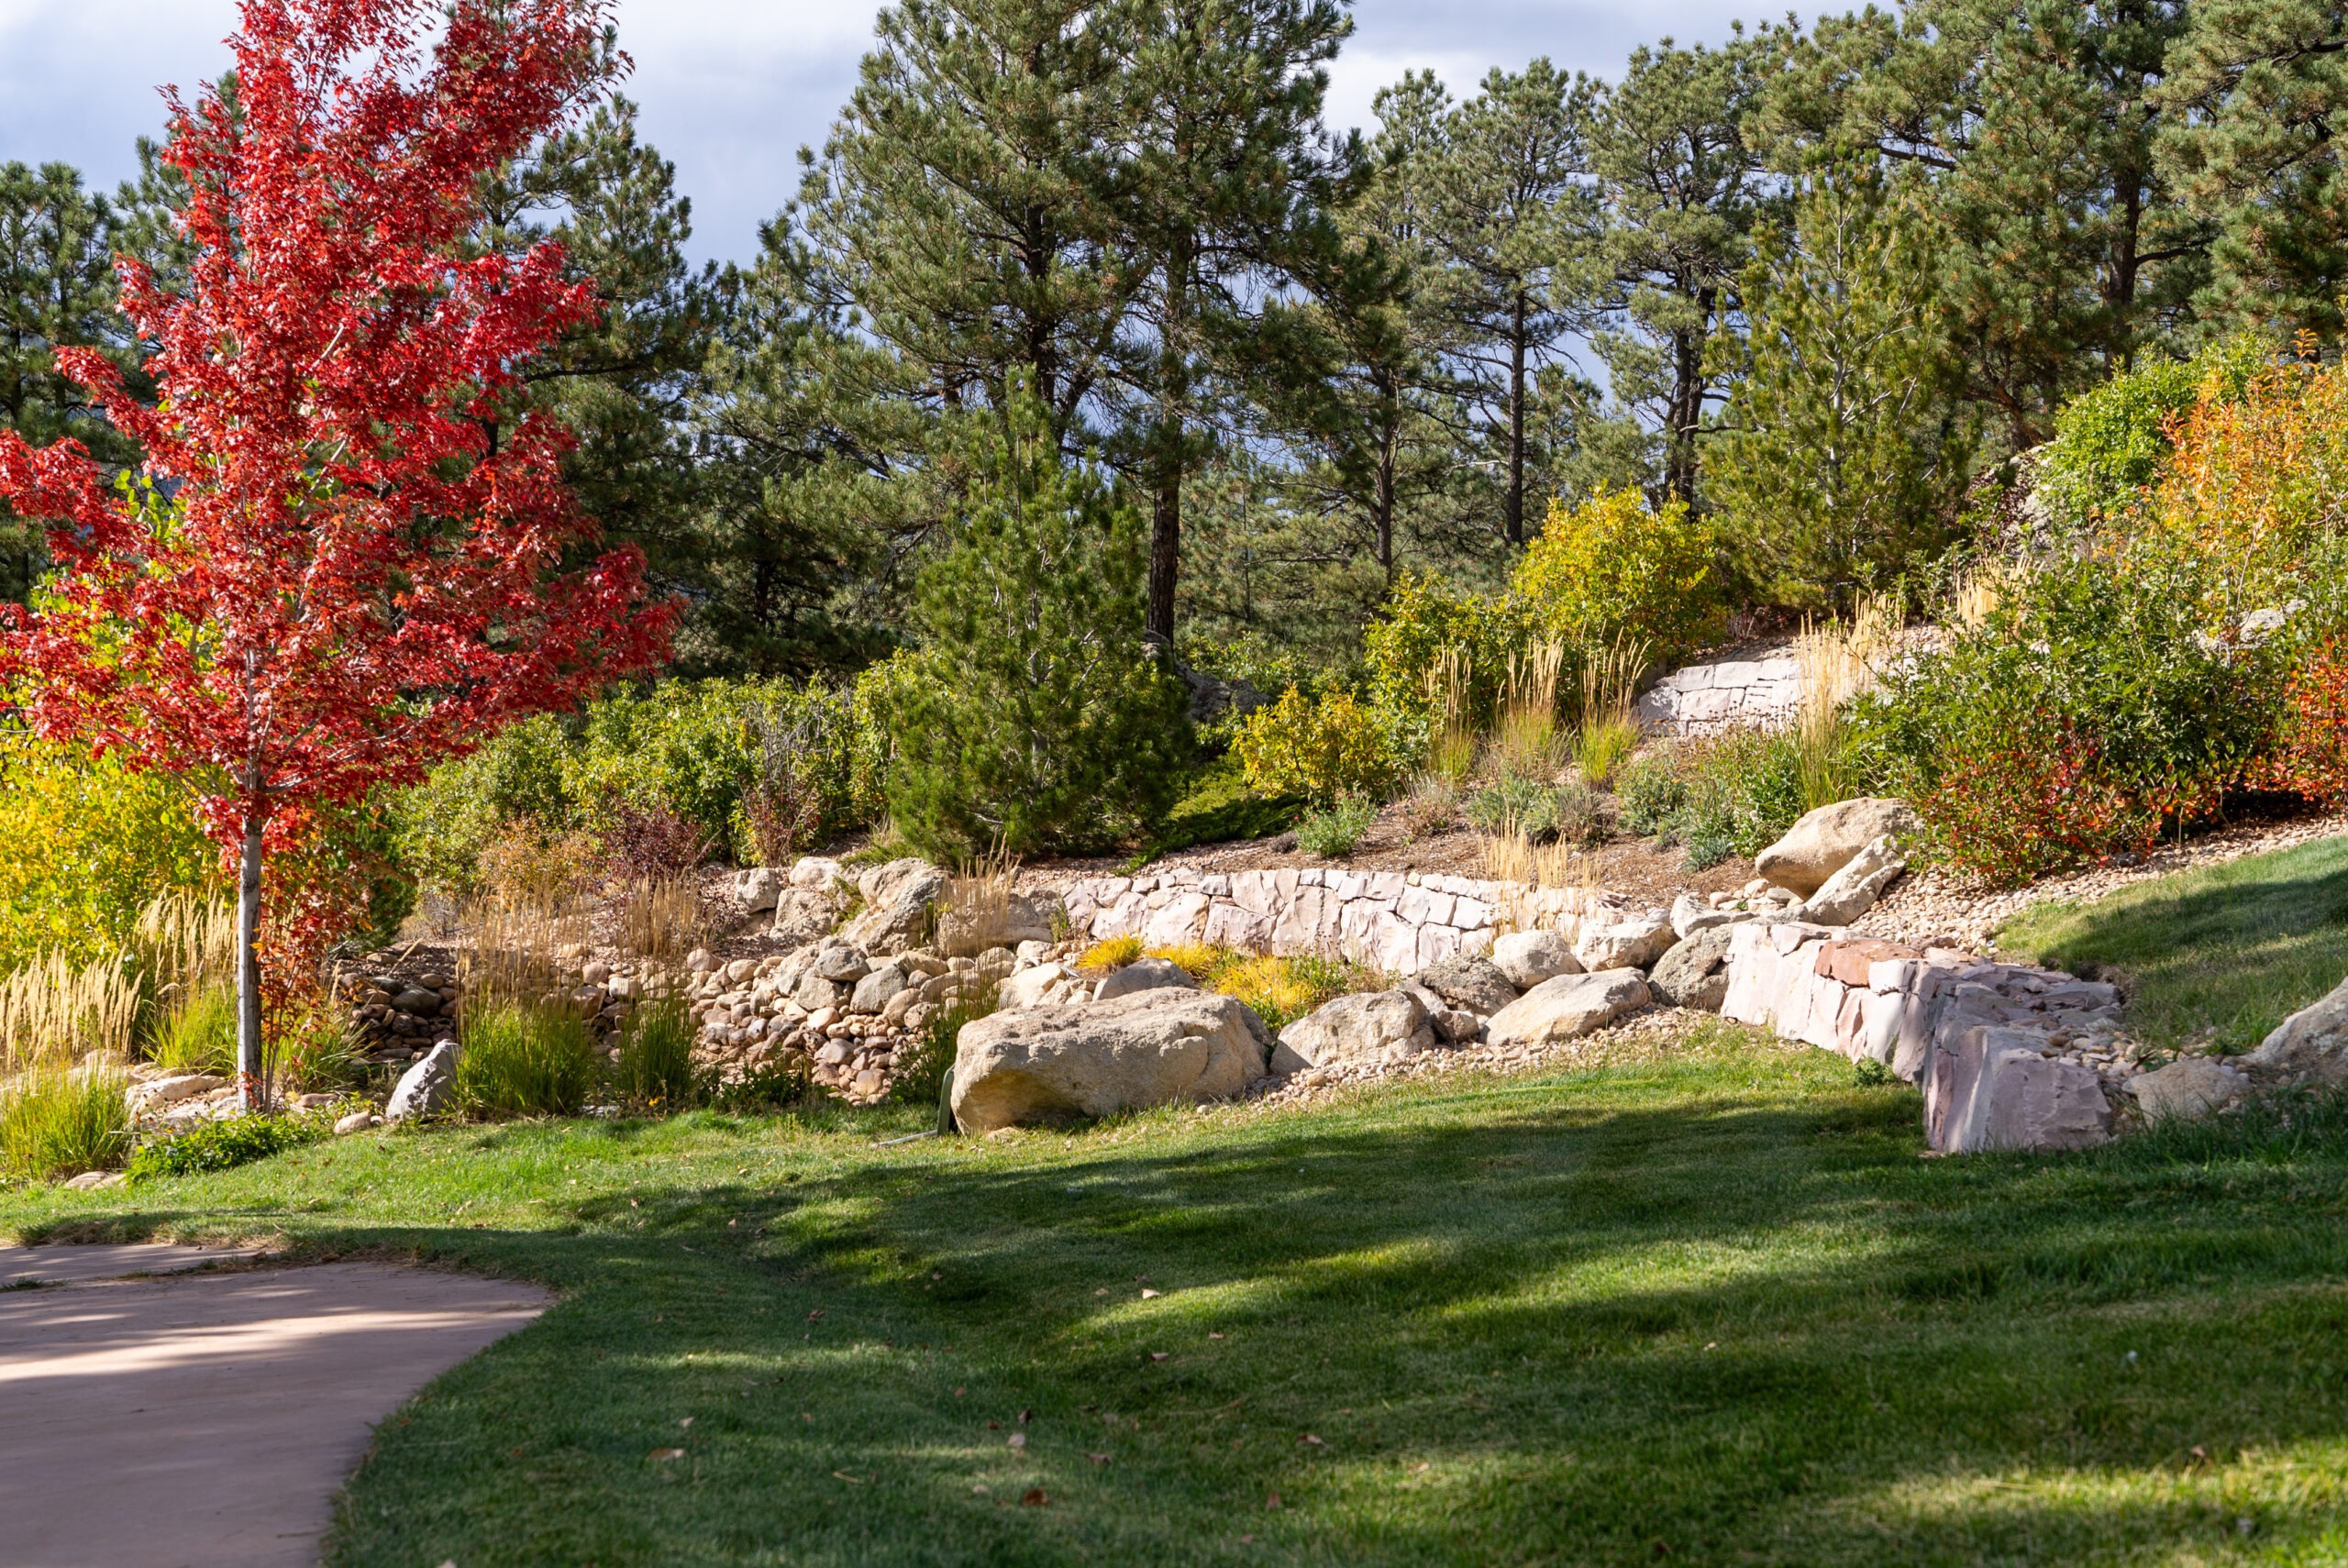 Creative rock garden designs by Hall Landscape Contractors enhancing natural beauty.